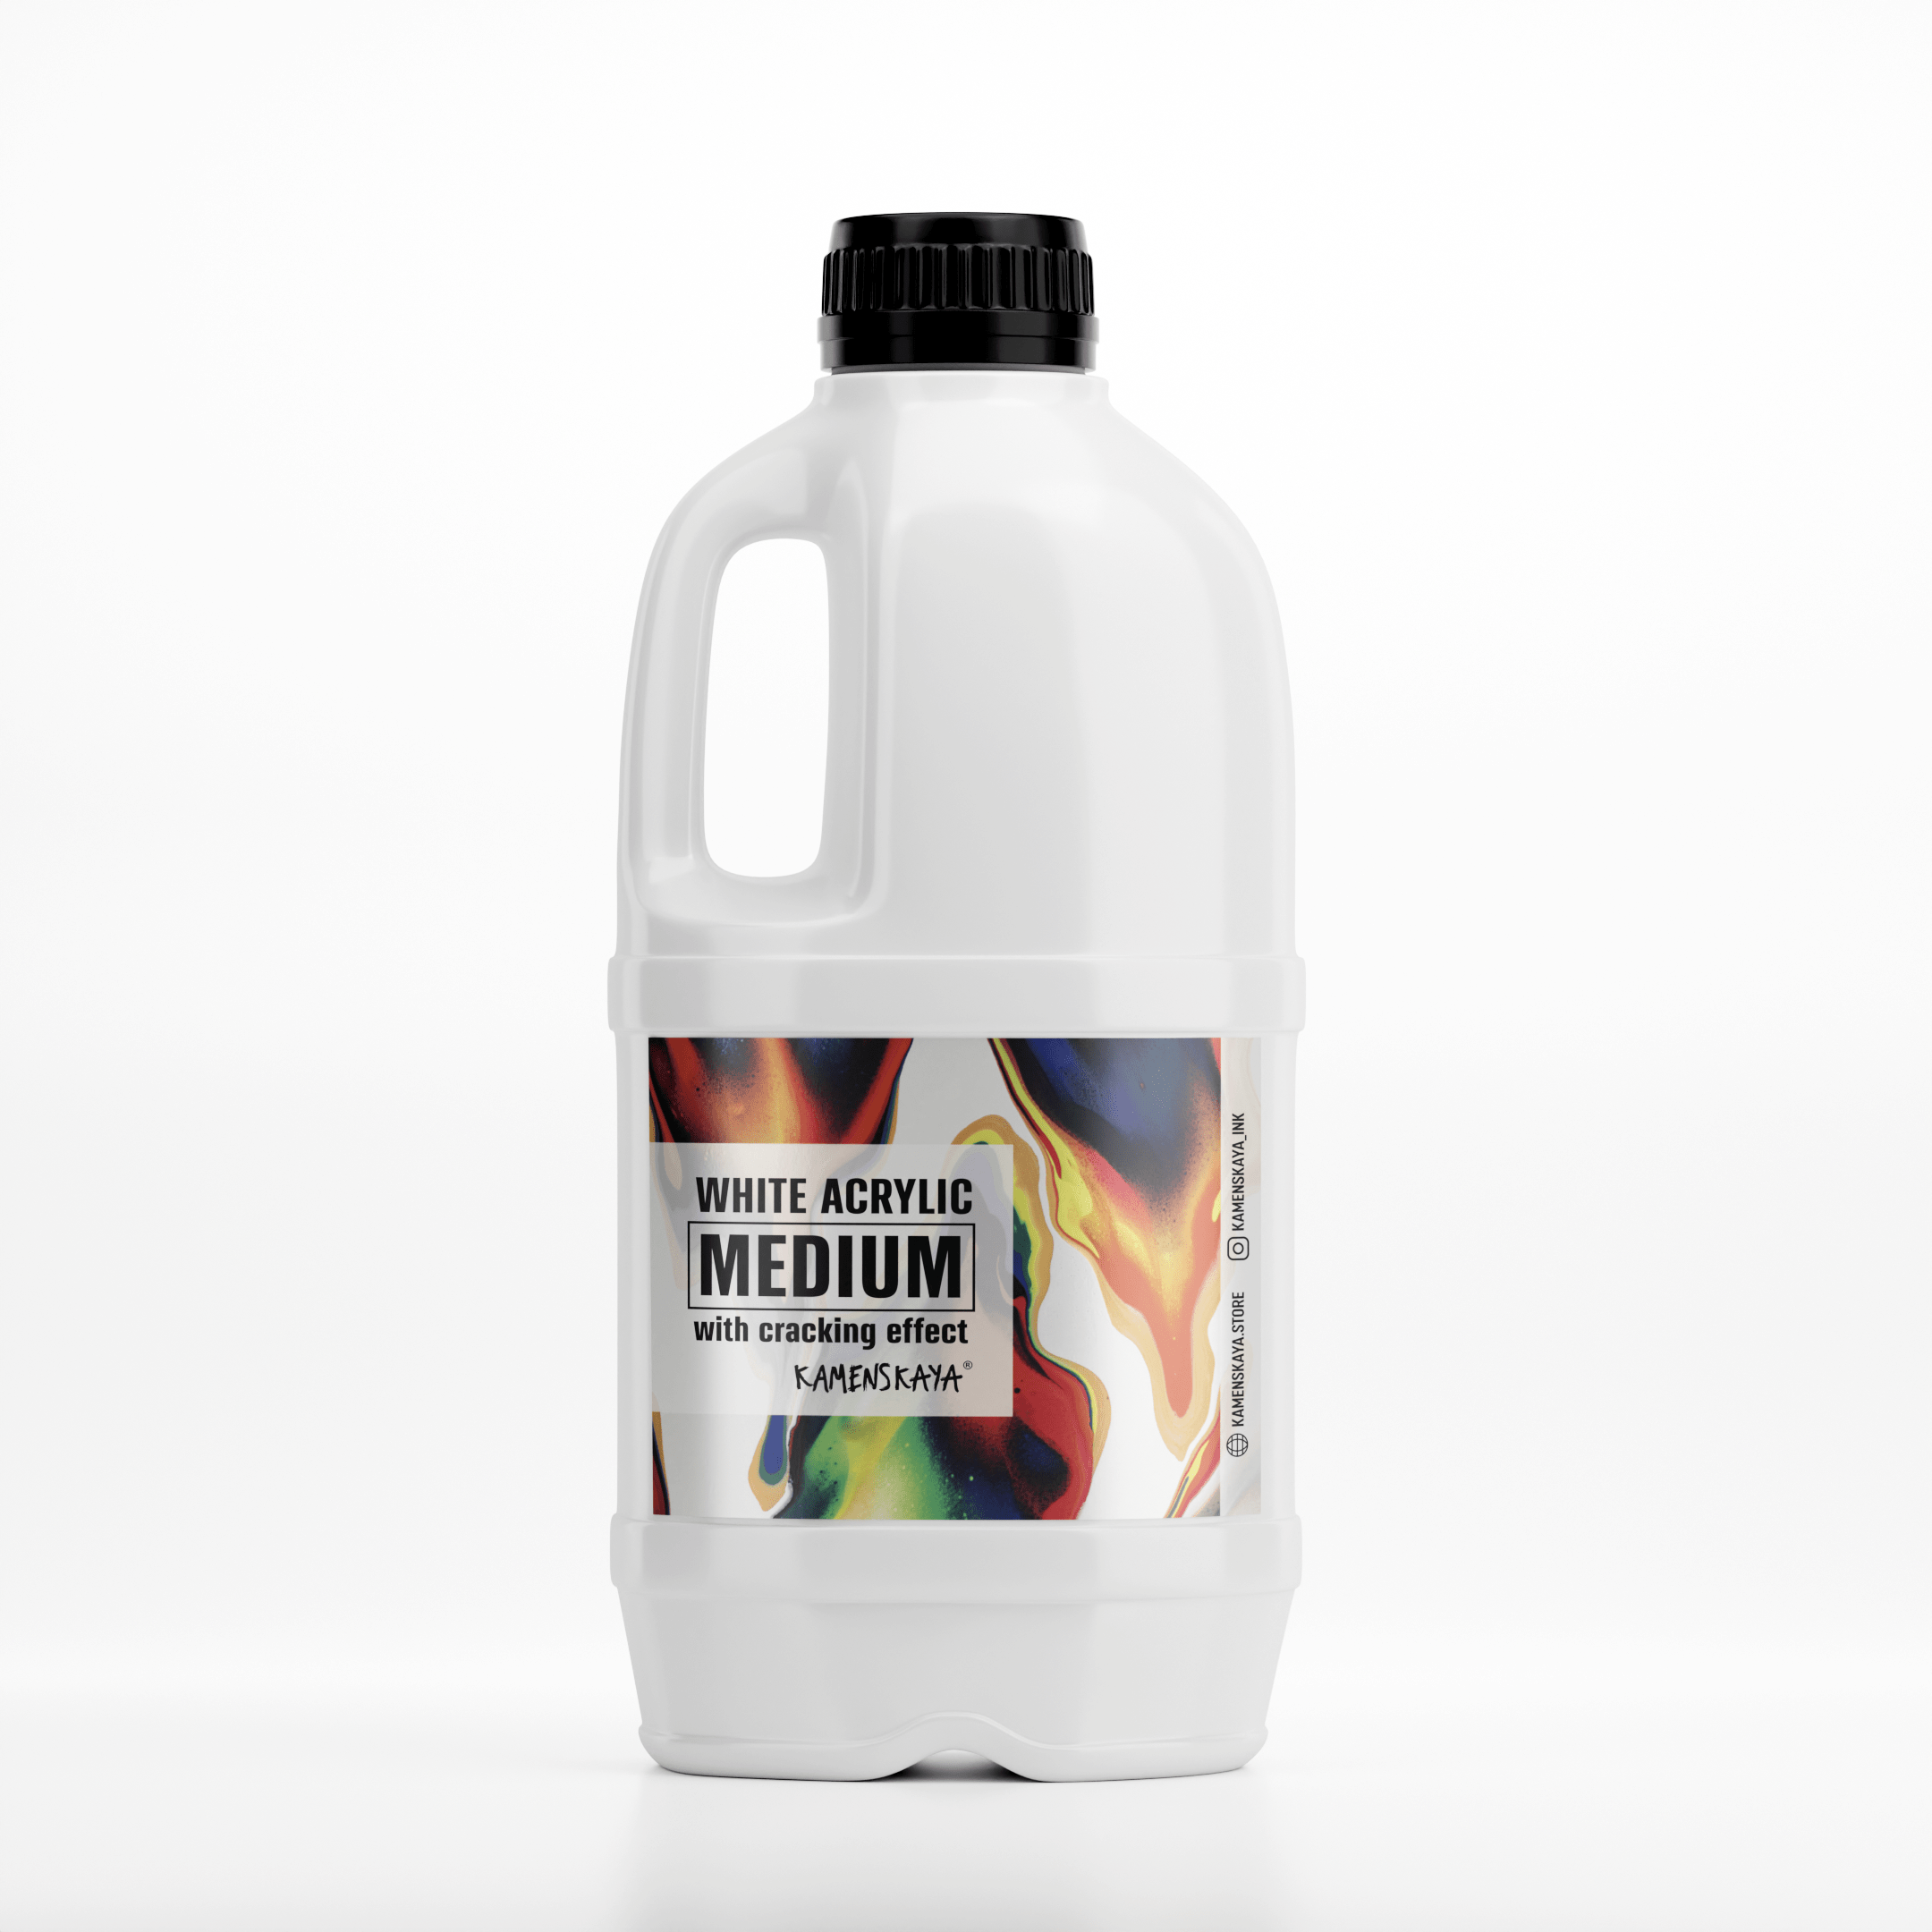 White acrylic medium with cracking effect – KAMENSKAYA